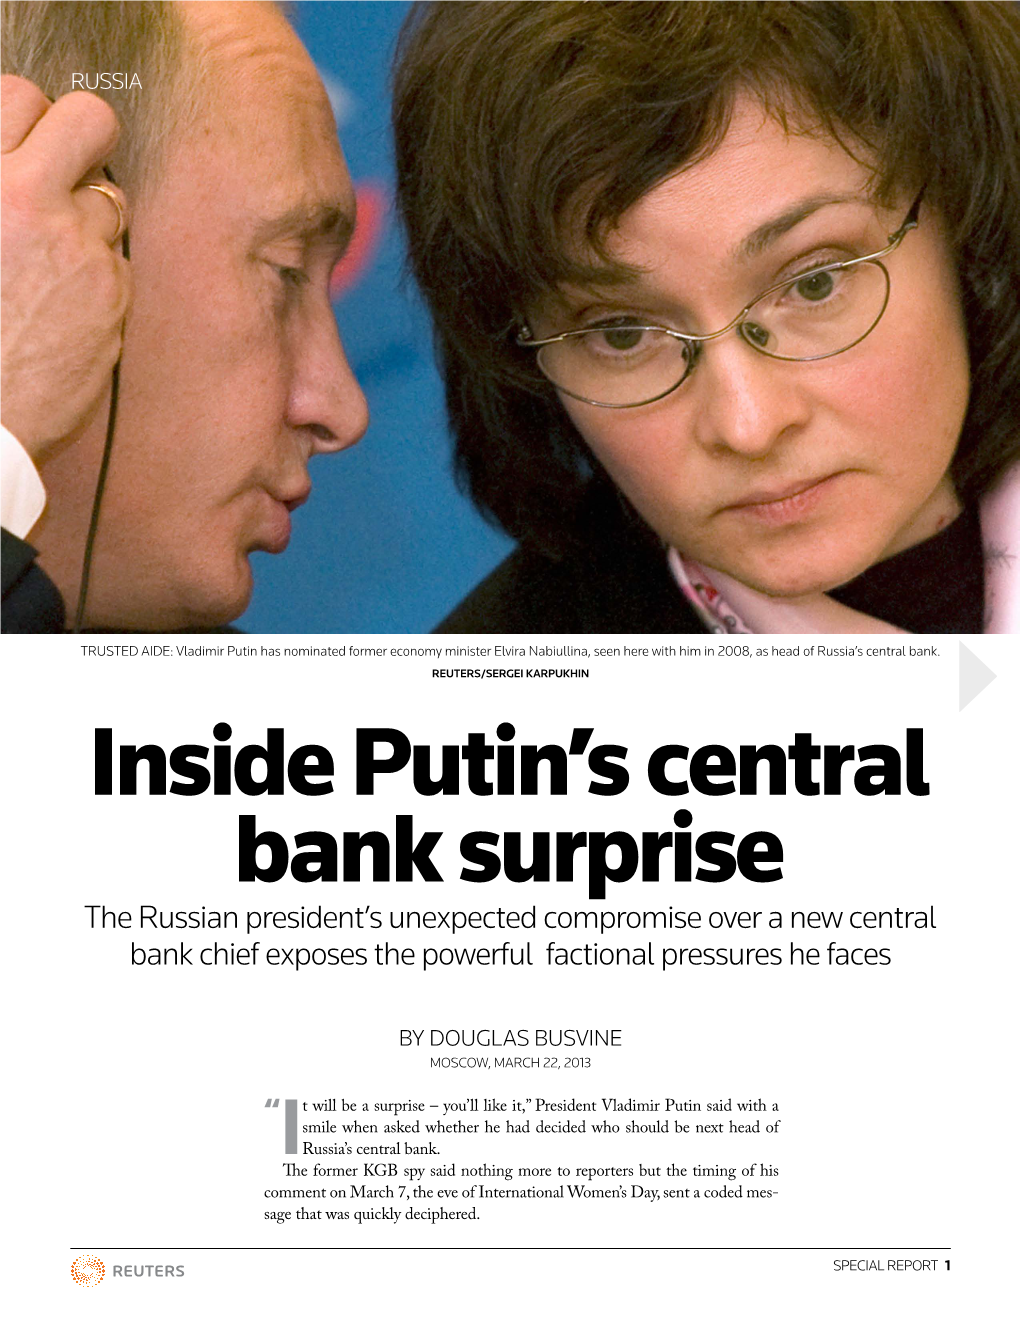 Inside Putin's Central Bank Surprise